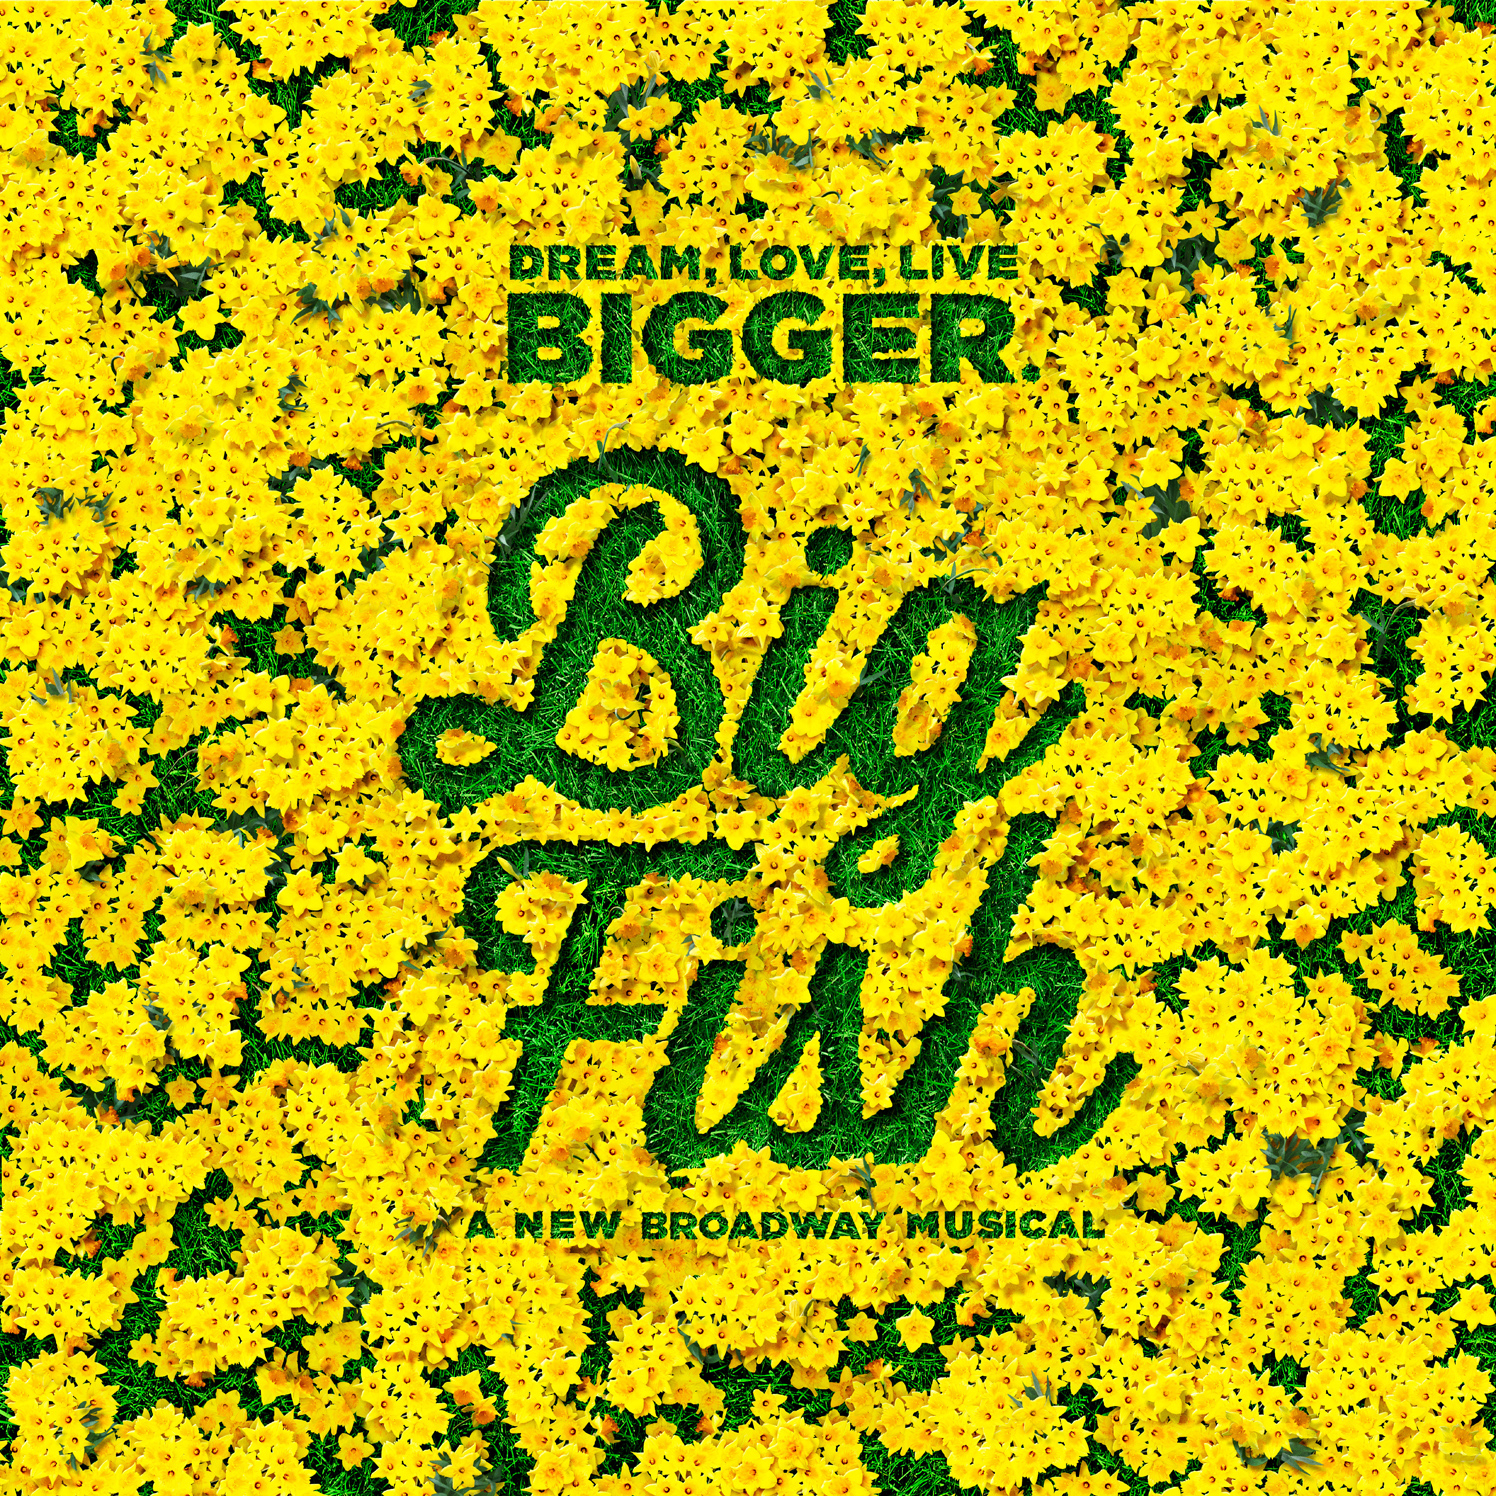 Bigger Fish